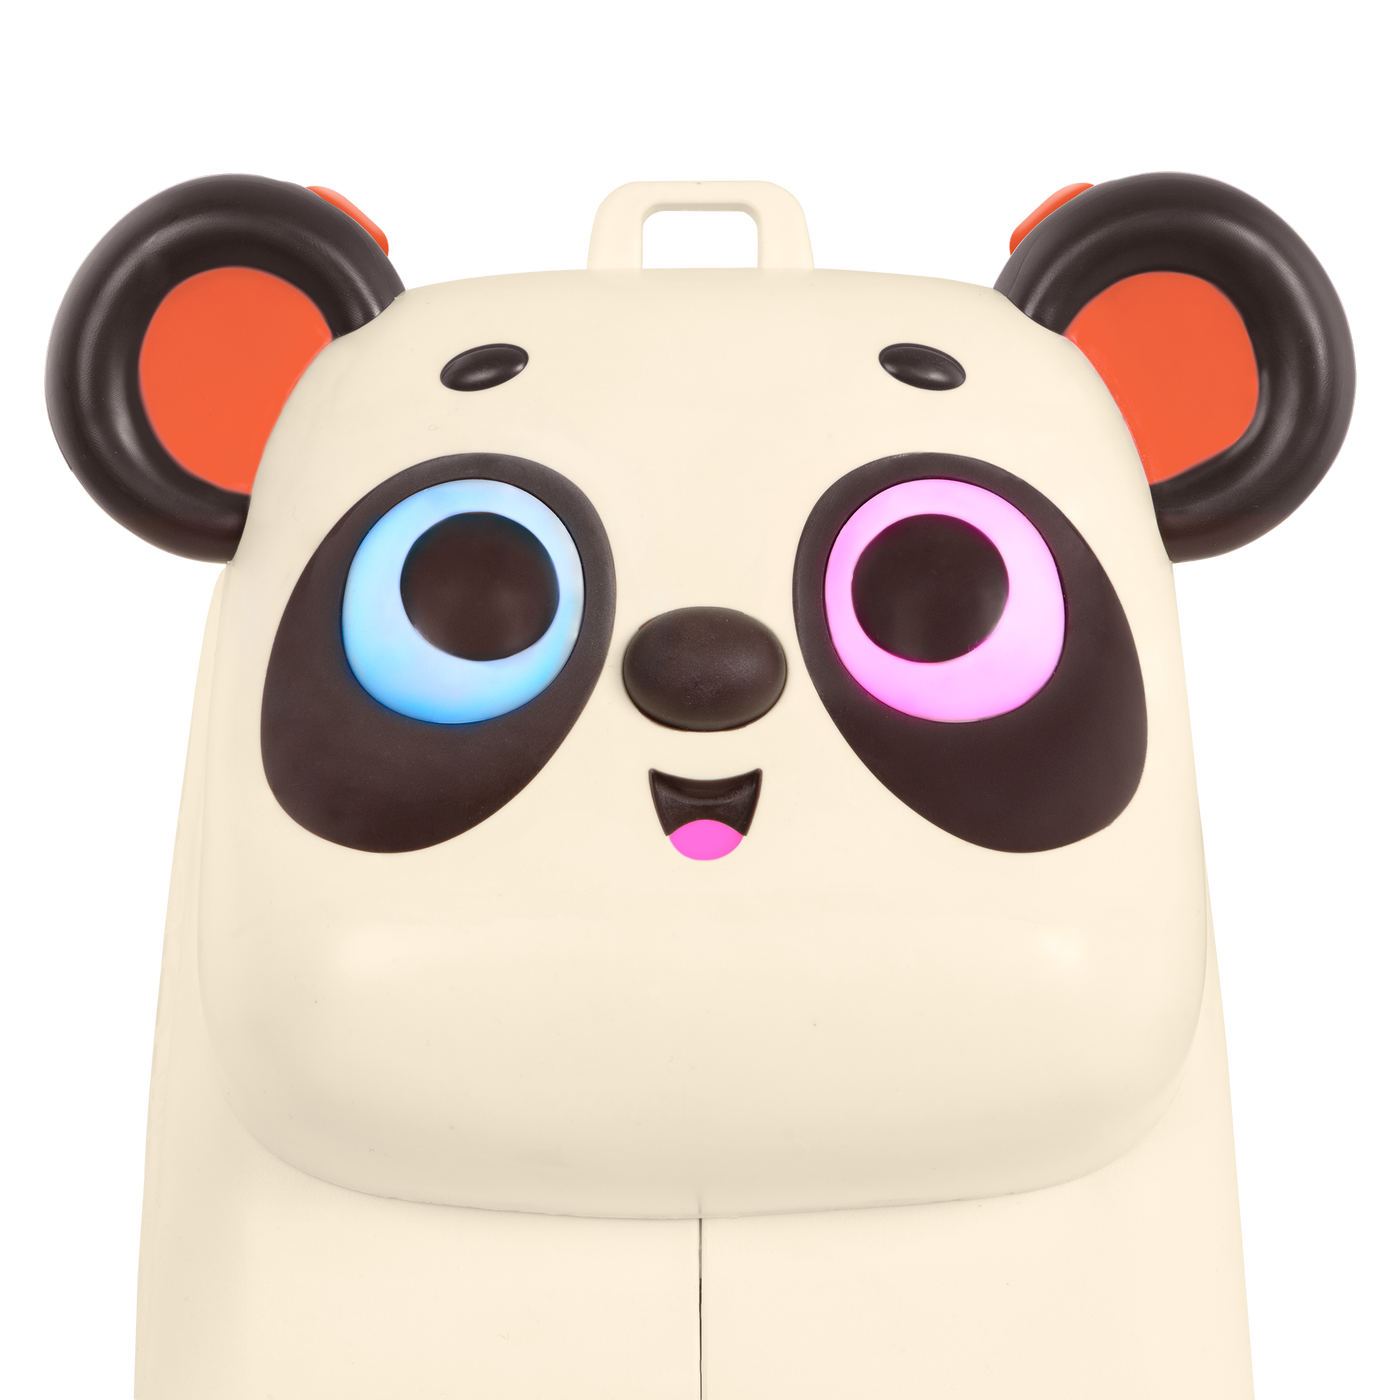 Panda ride-on suitcase